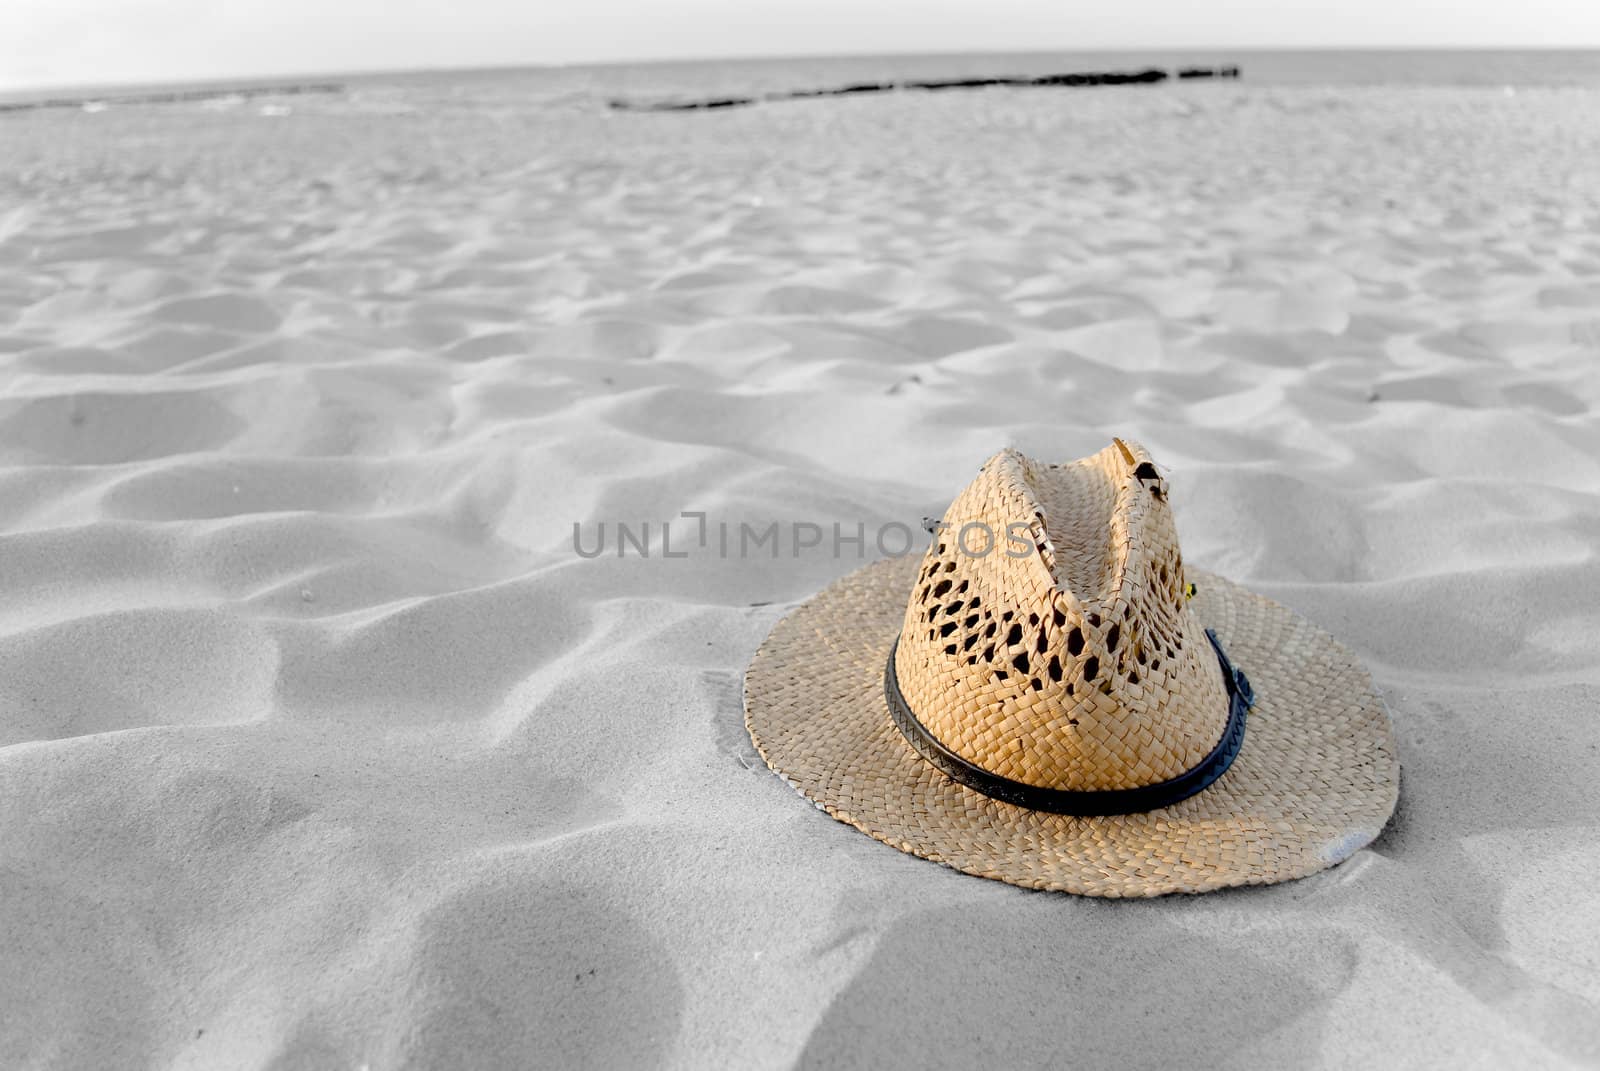 lonley hat on the beach